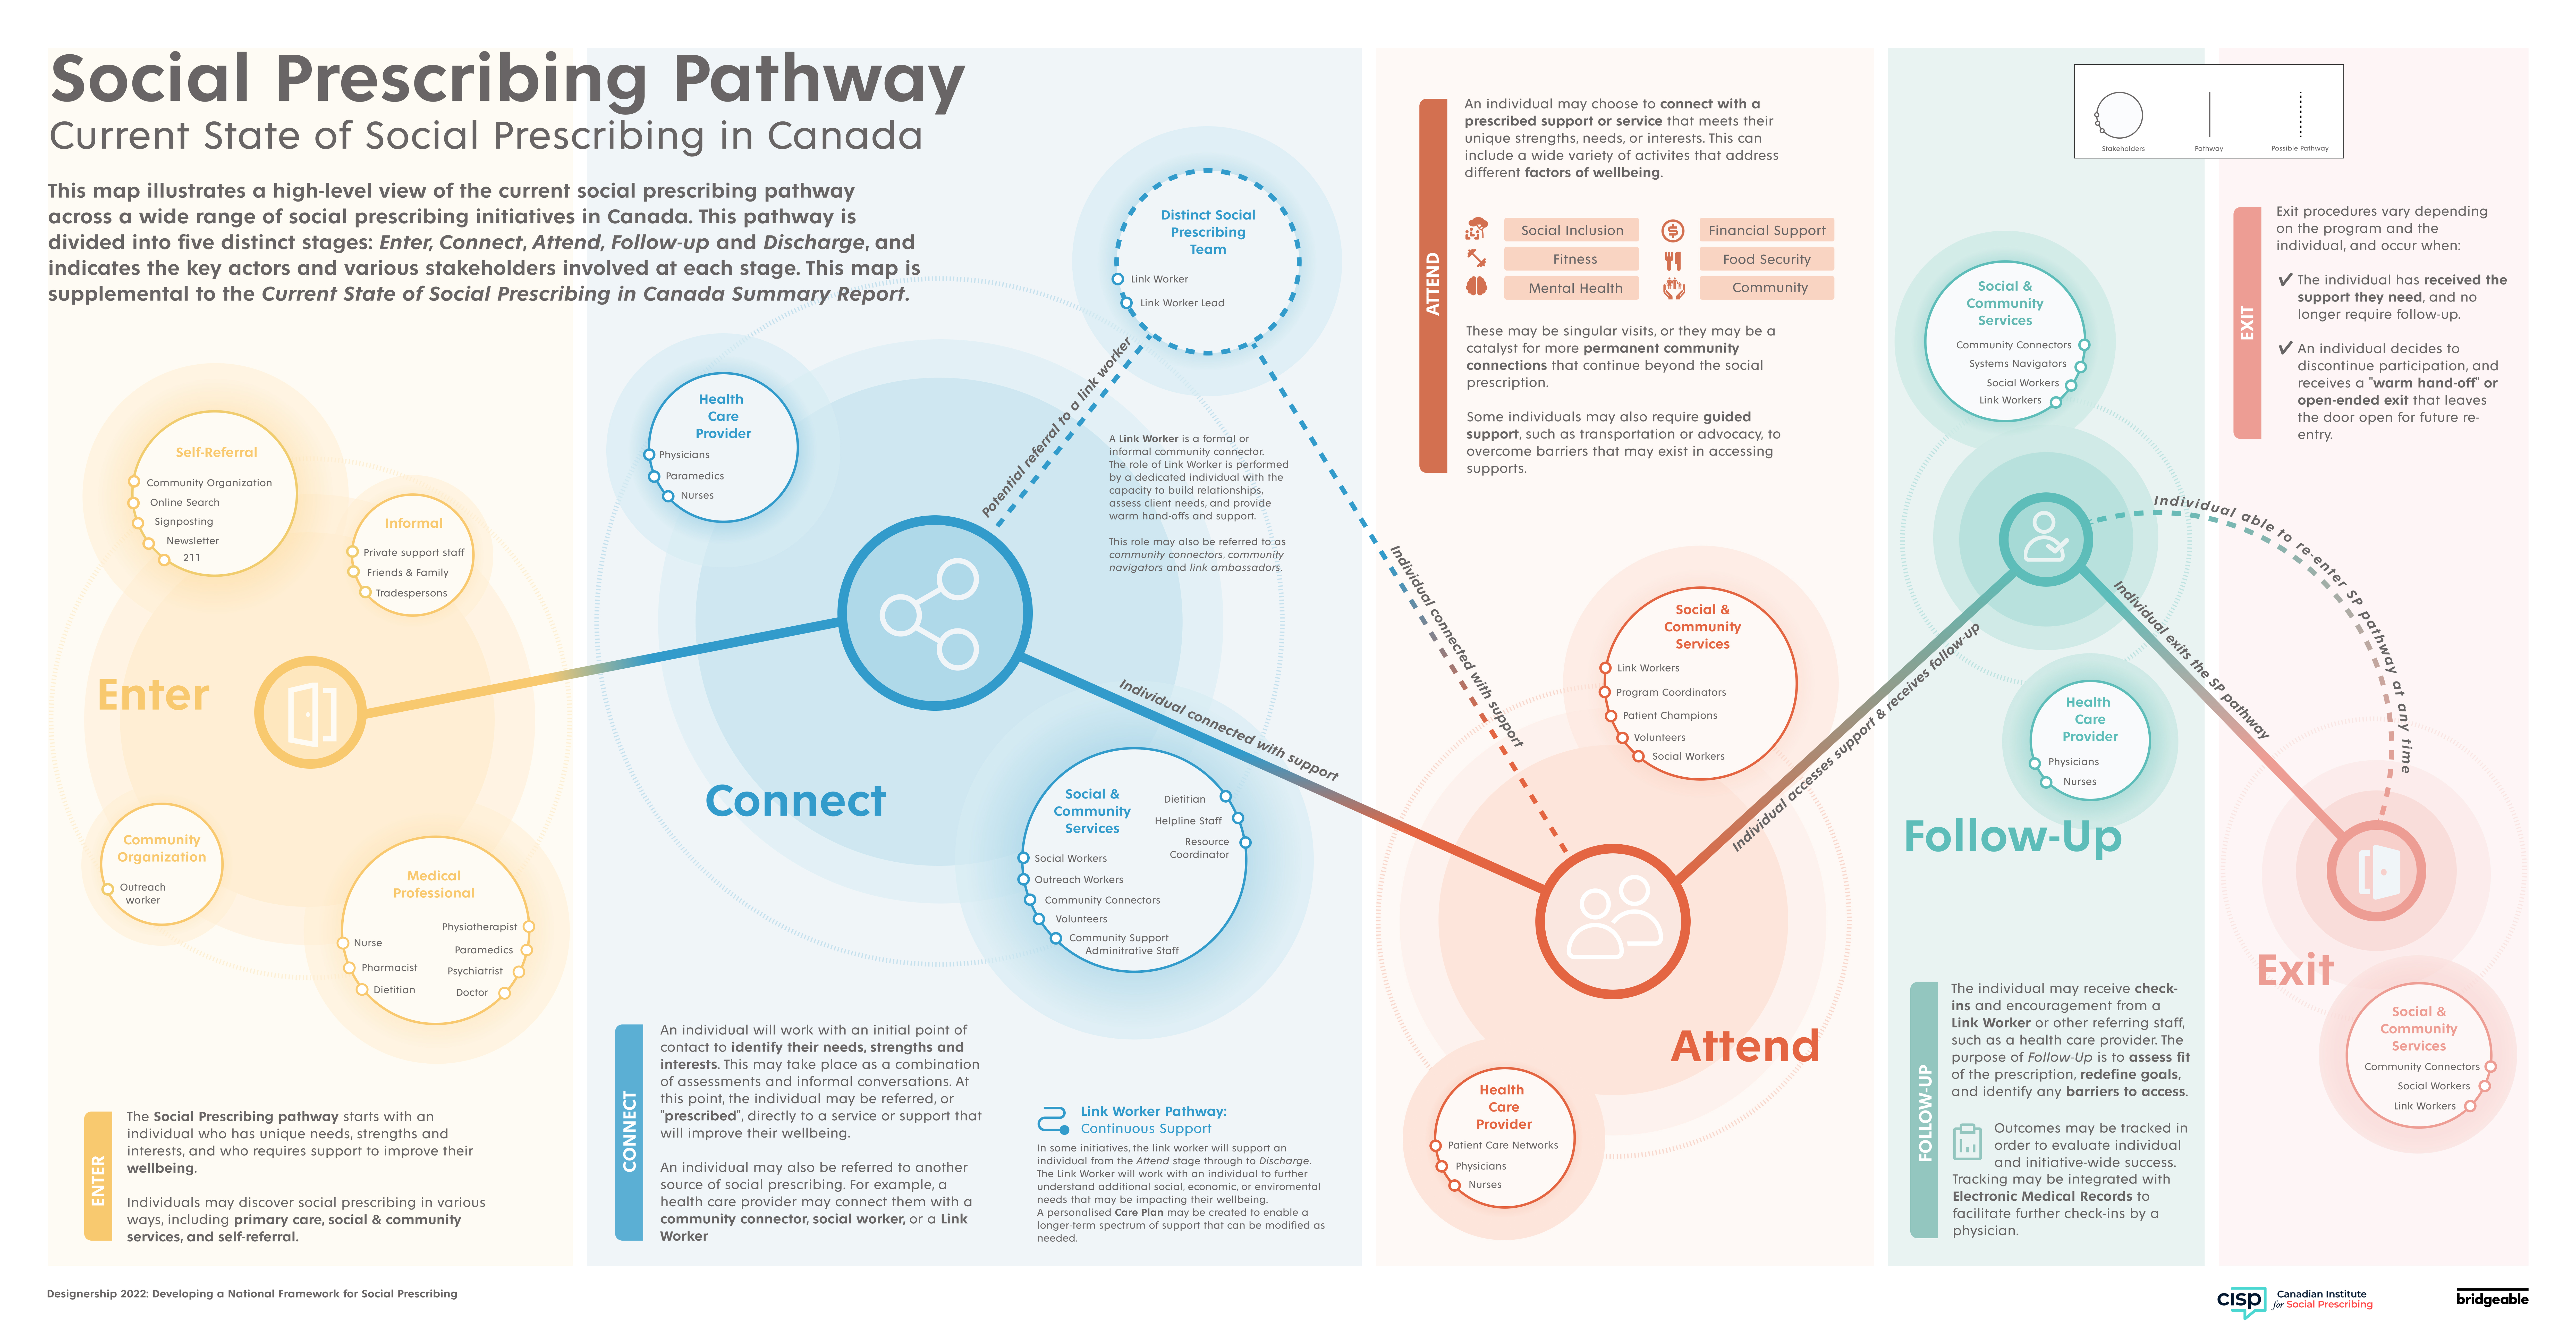 The social prescribing pathway in Canada mapped